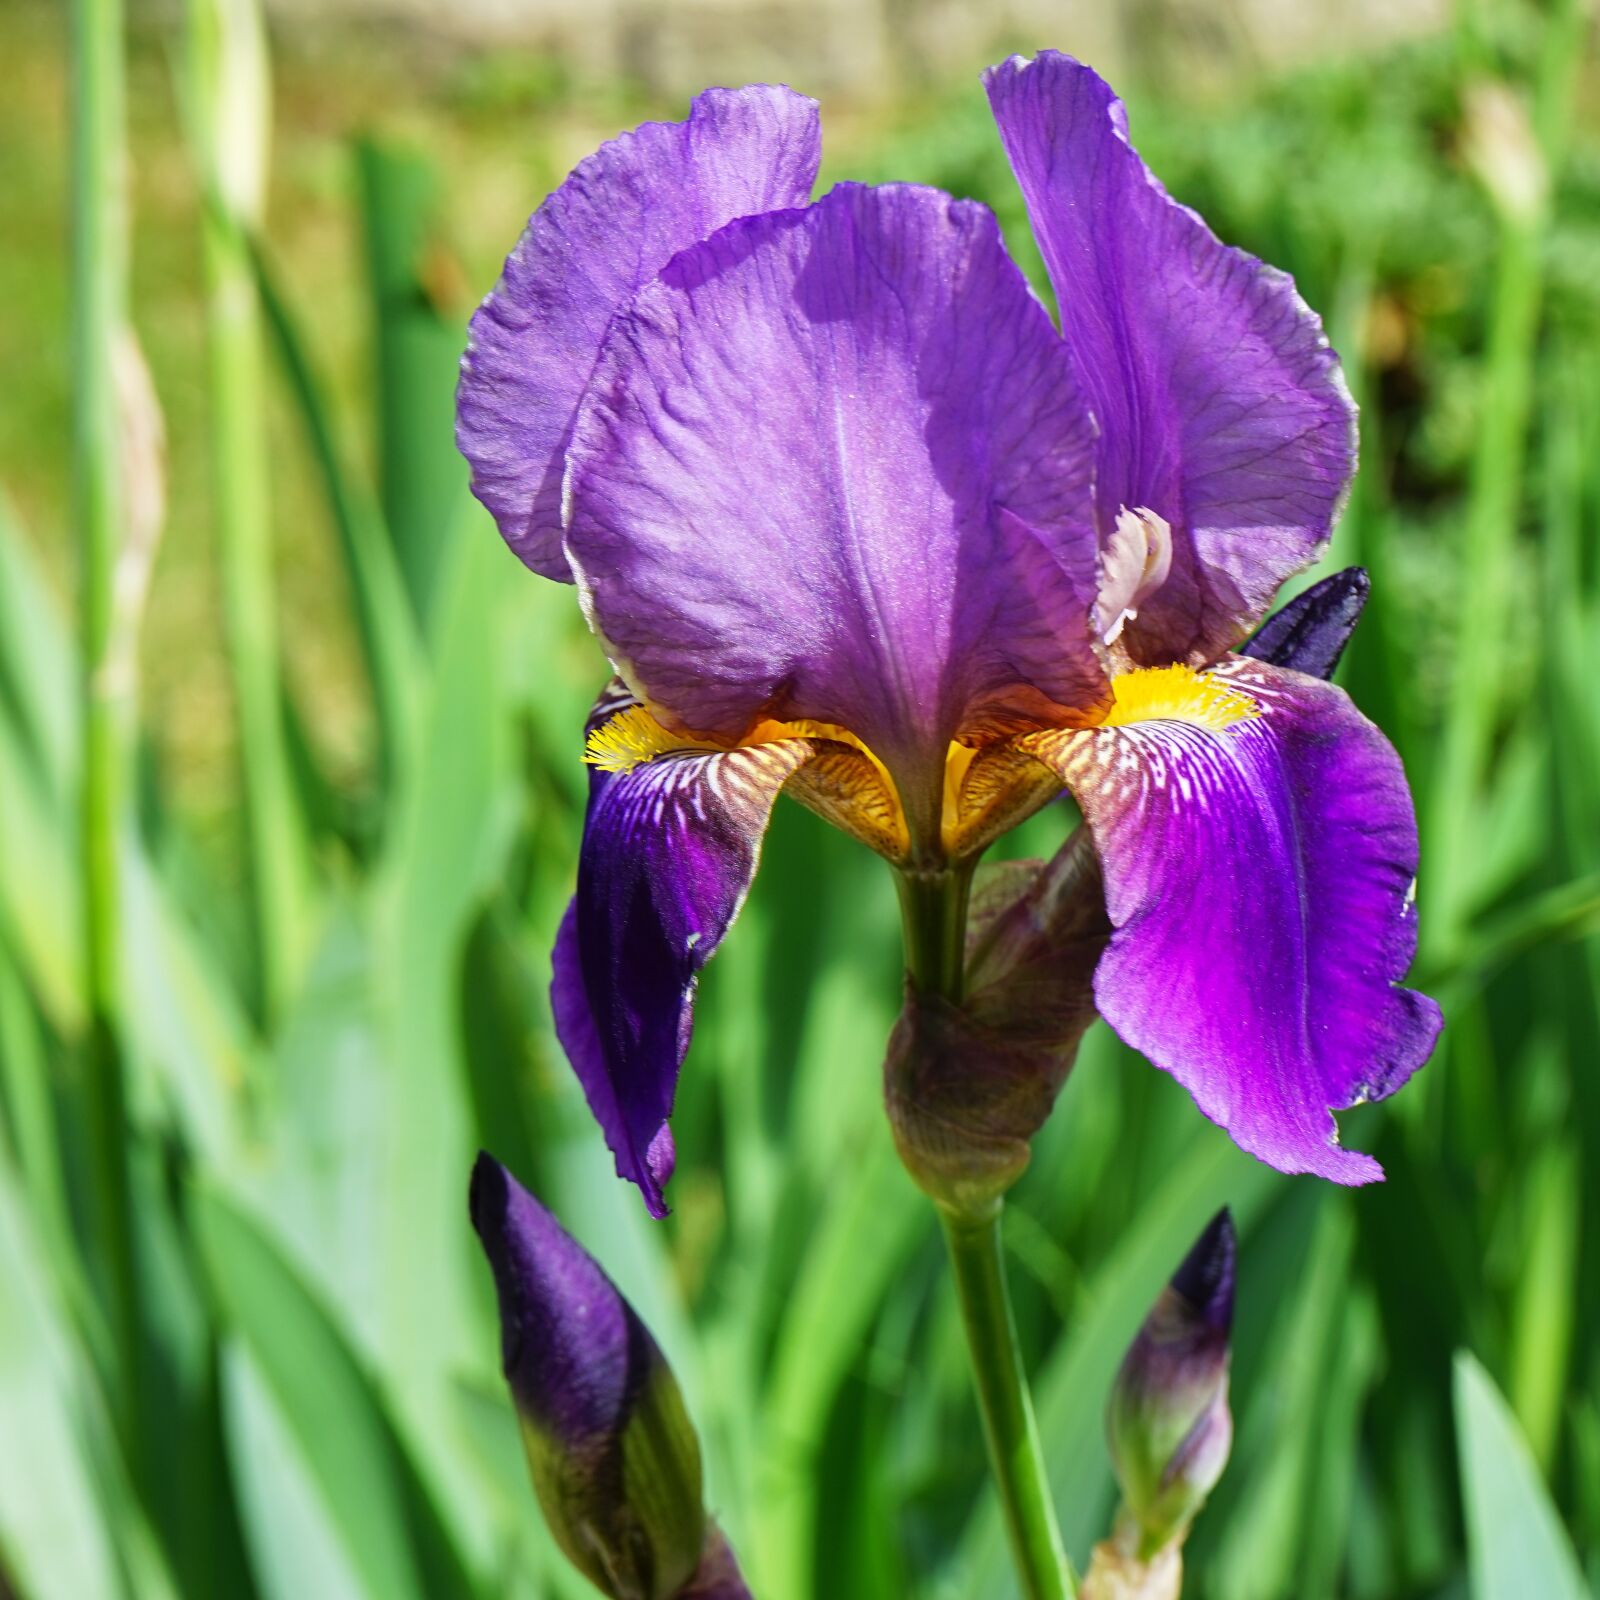 Sony a7 sample photo. Flower, iris, purity photography